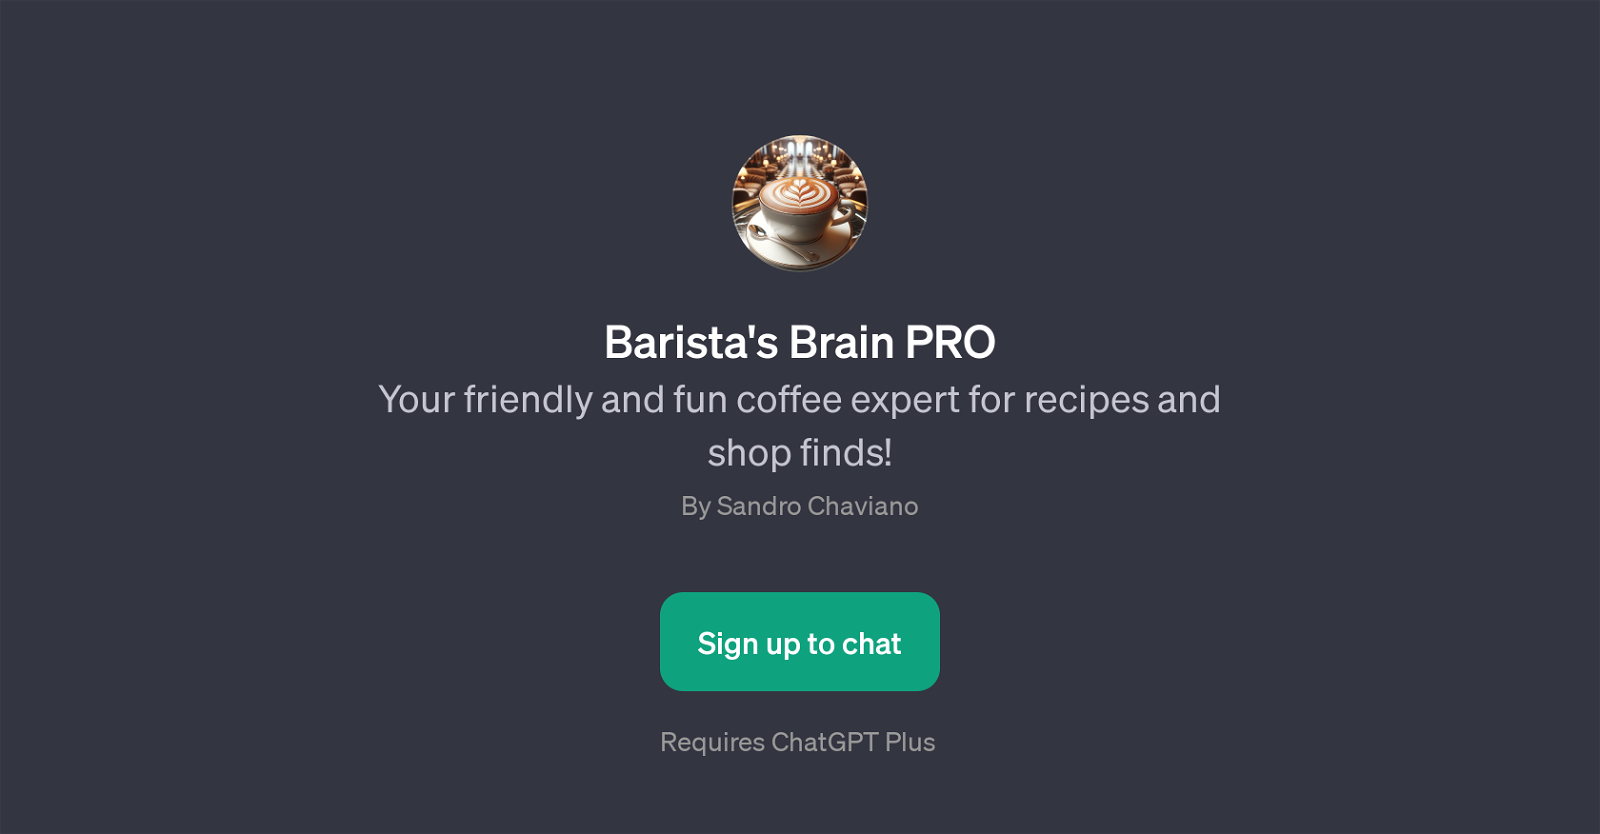 Barista's Brain PRO website